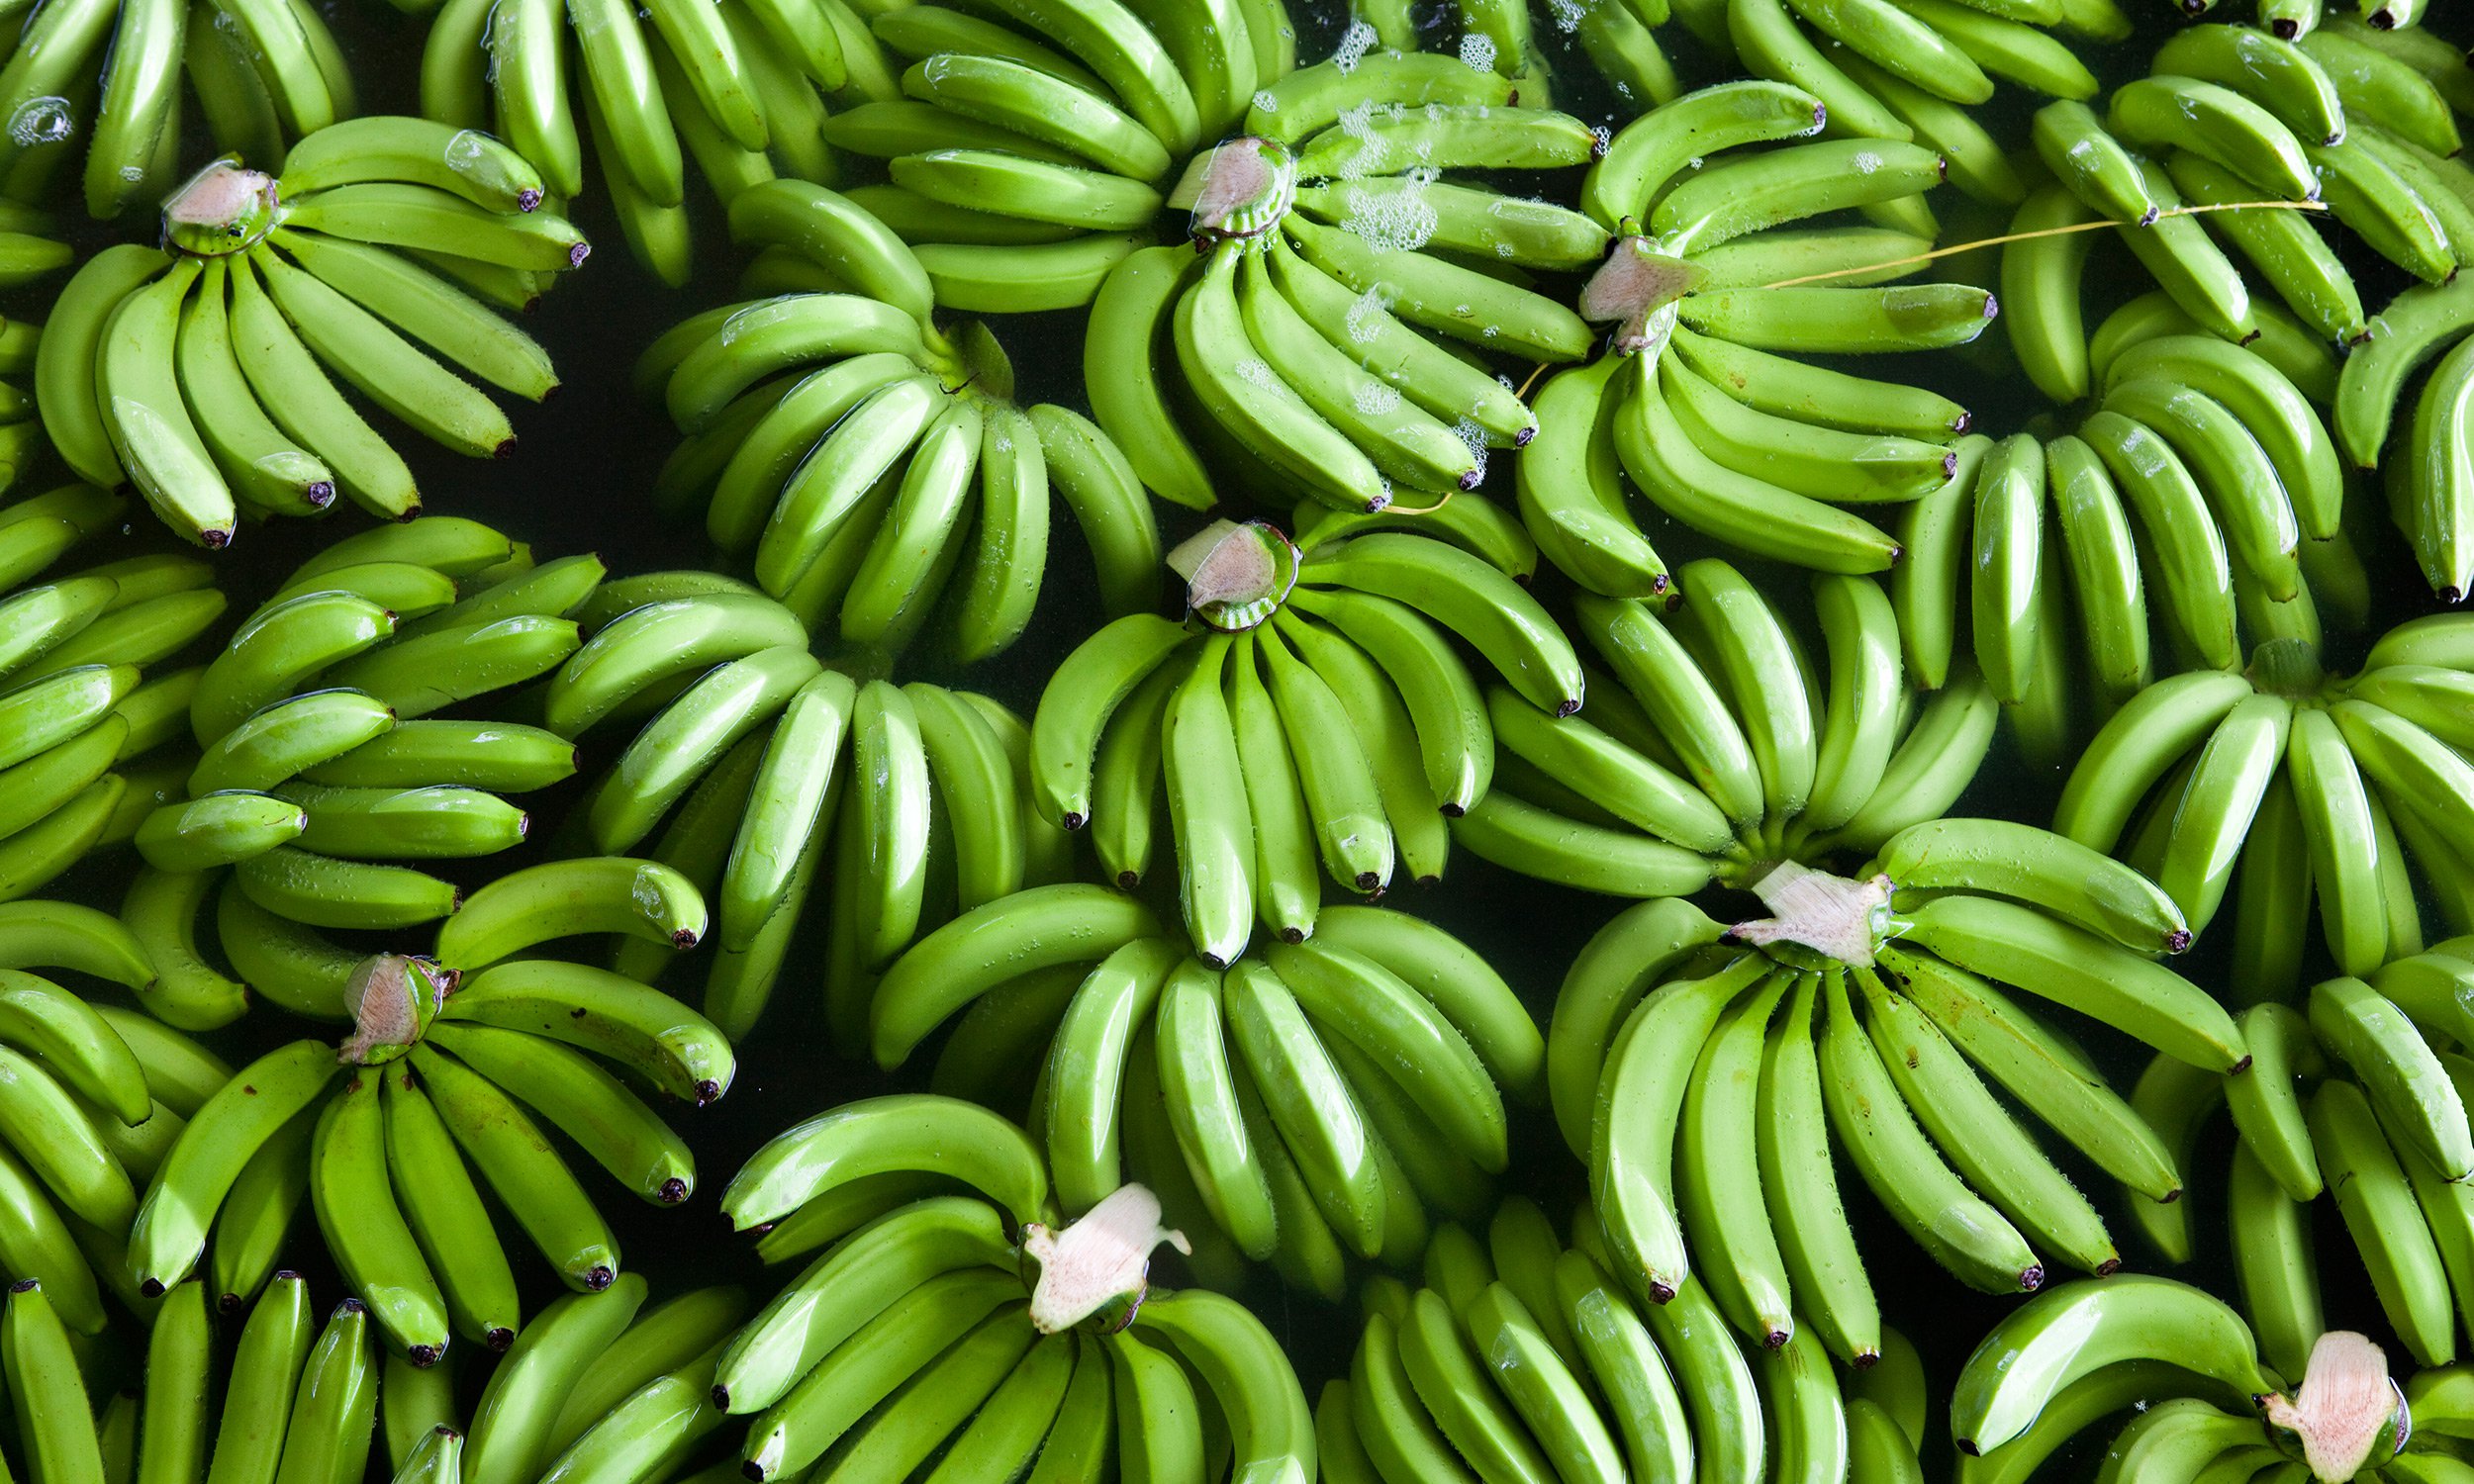 Green Bananas for sale - Yaad Market